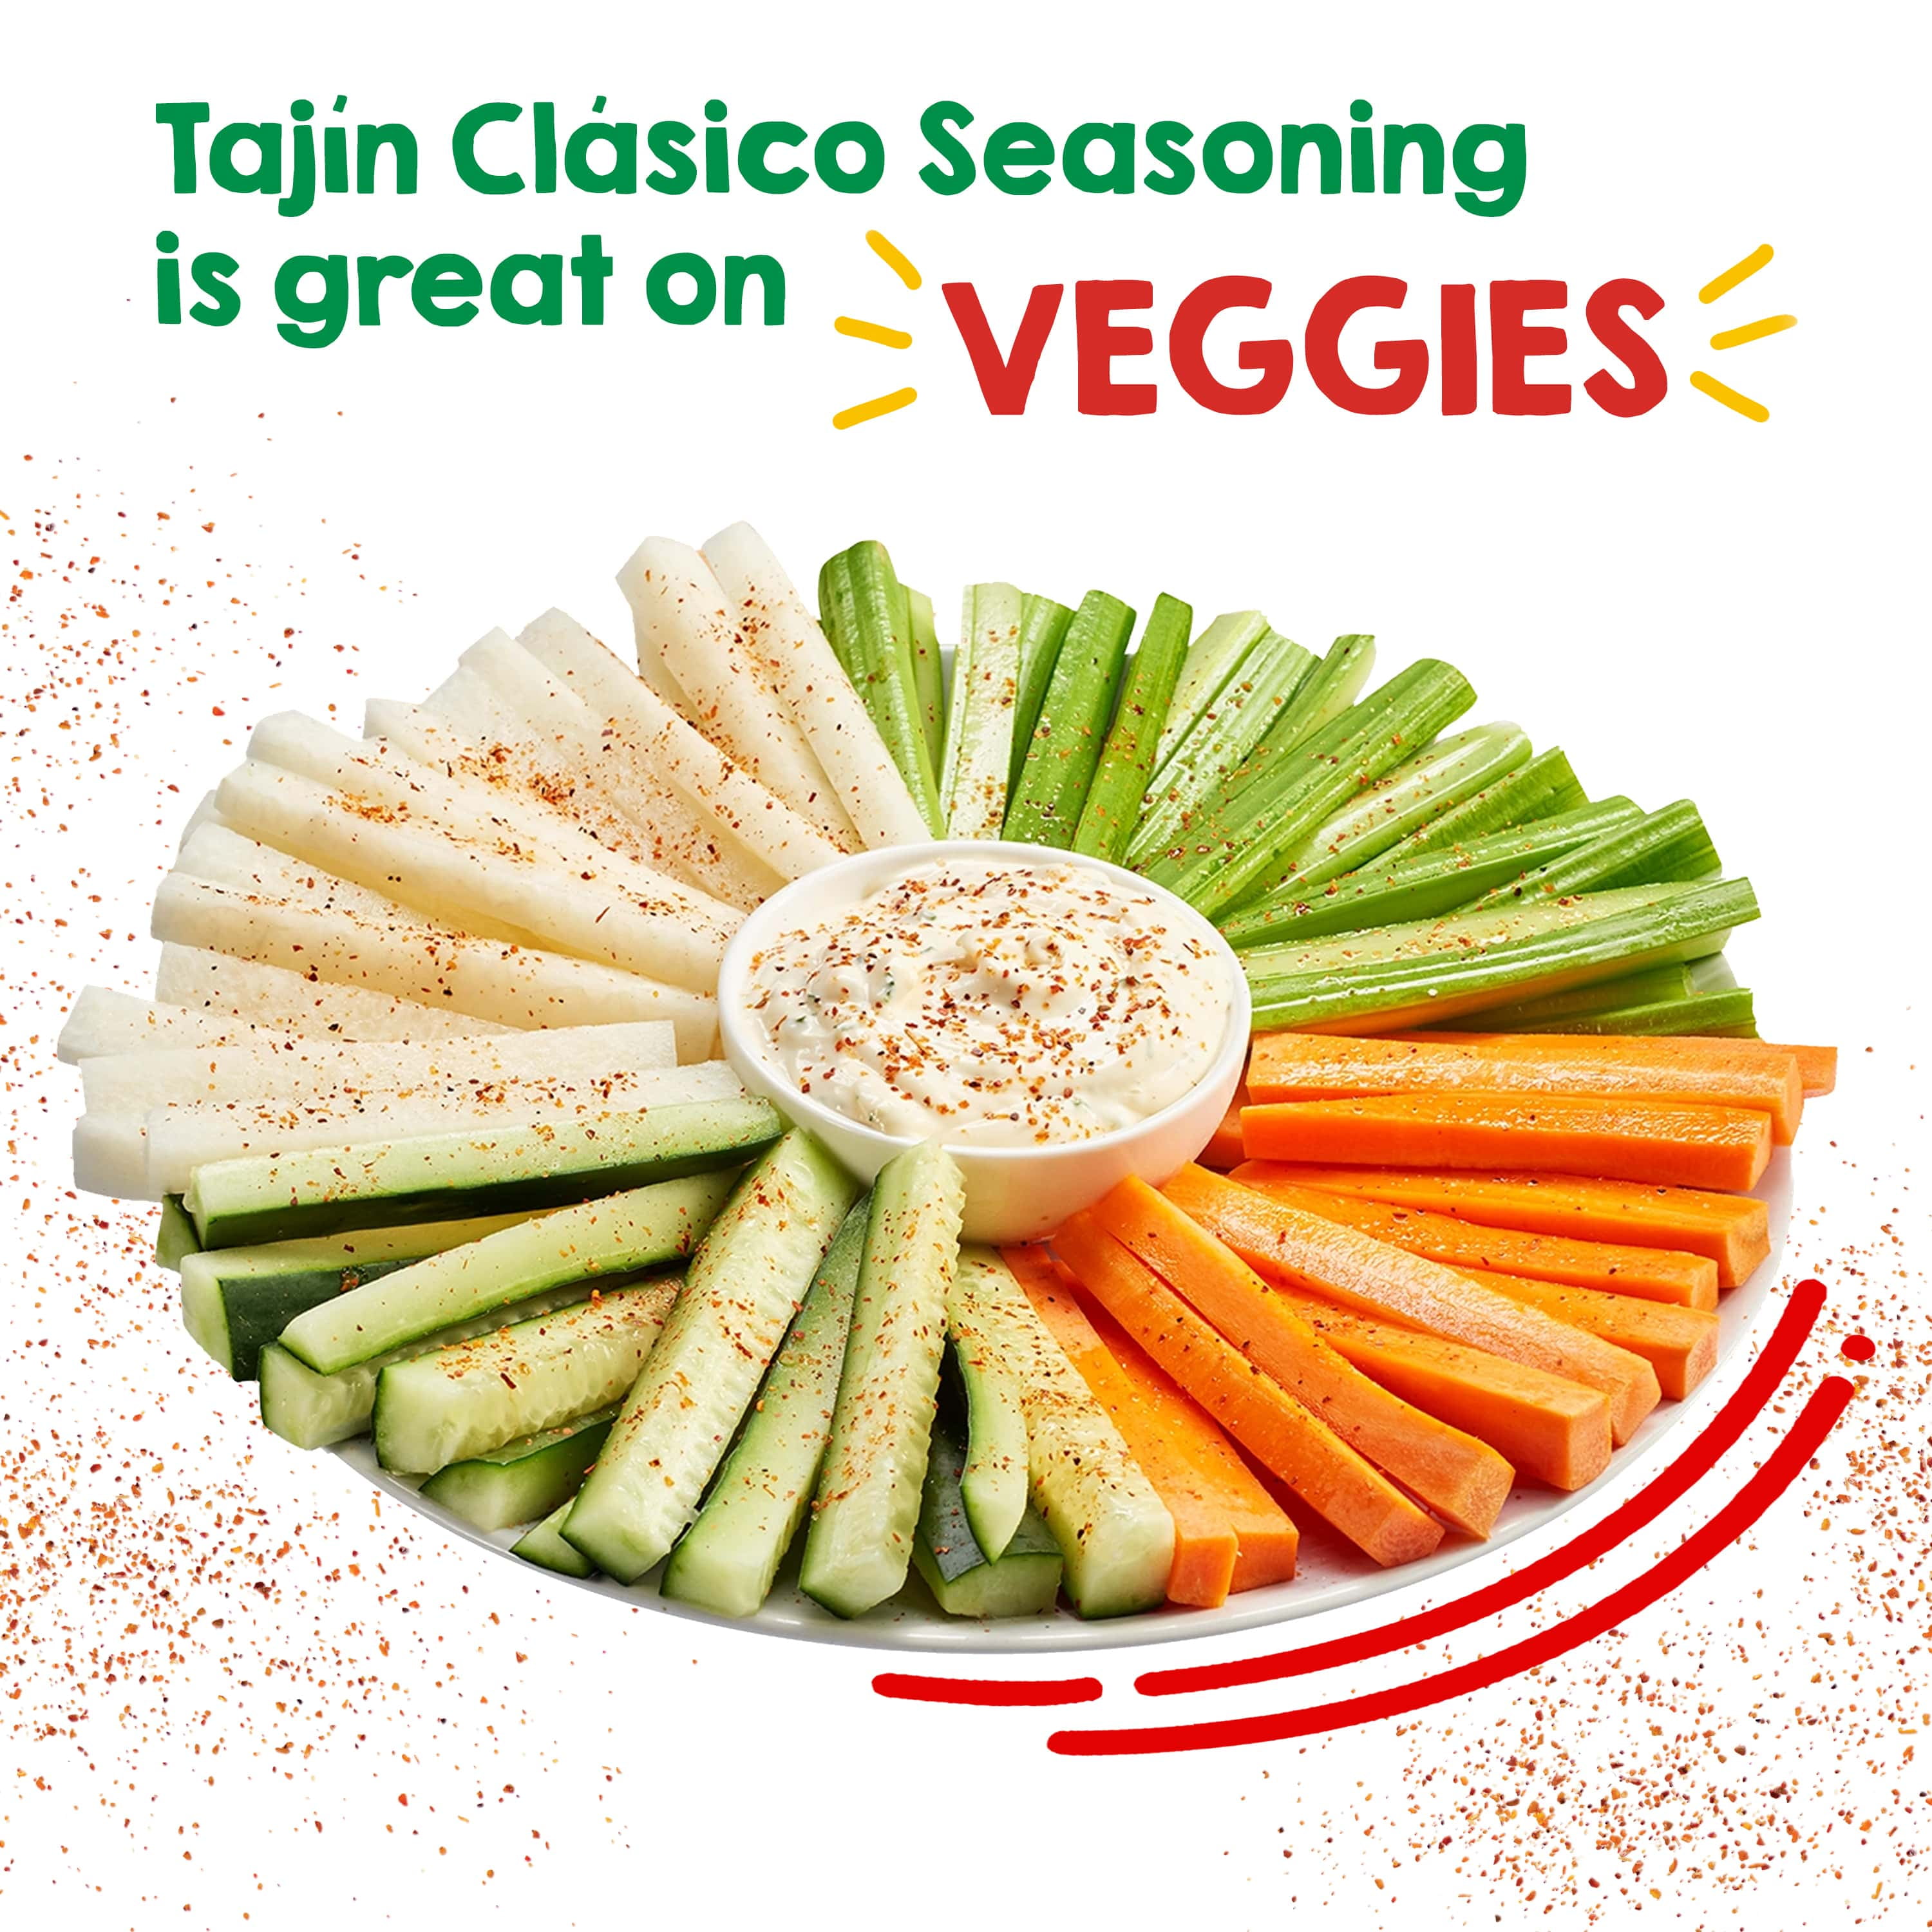 Tajin Classic Seasoning 5oz : Grocery fast delivery by App or Online